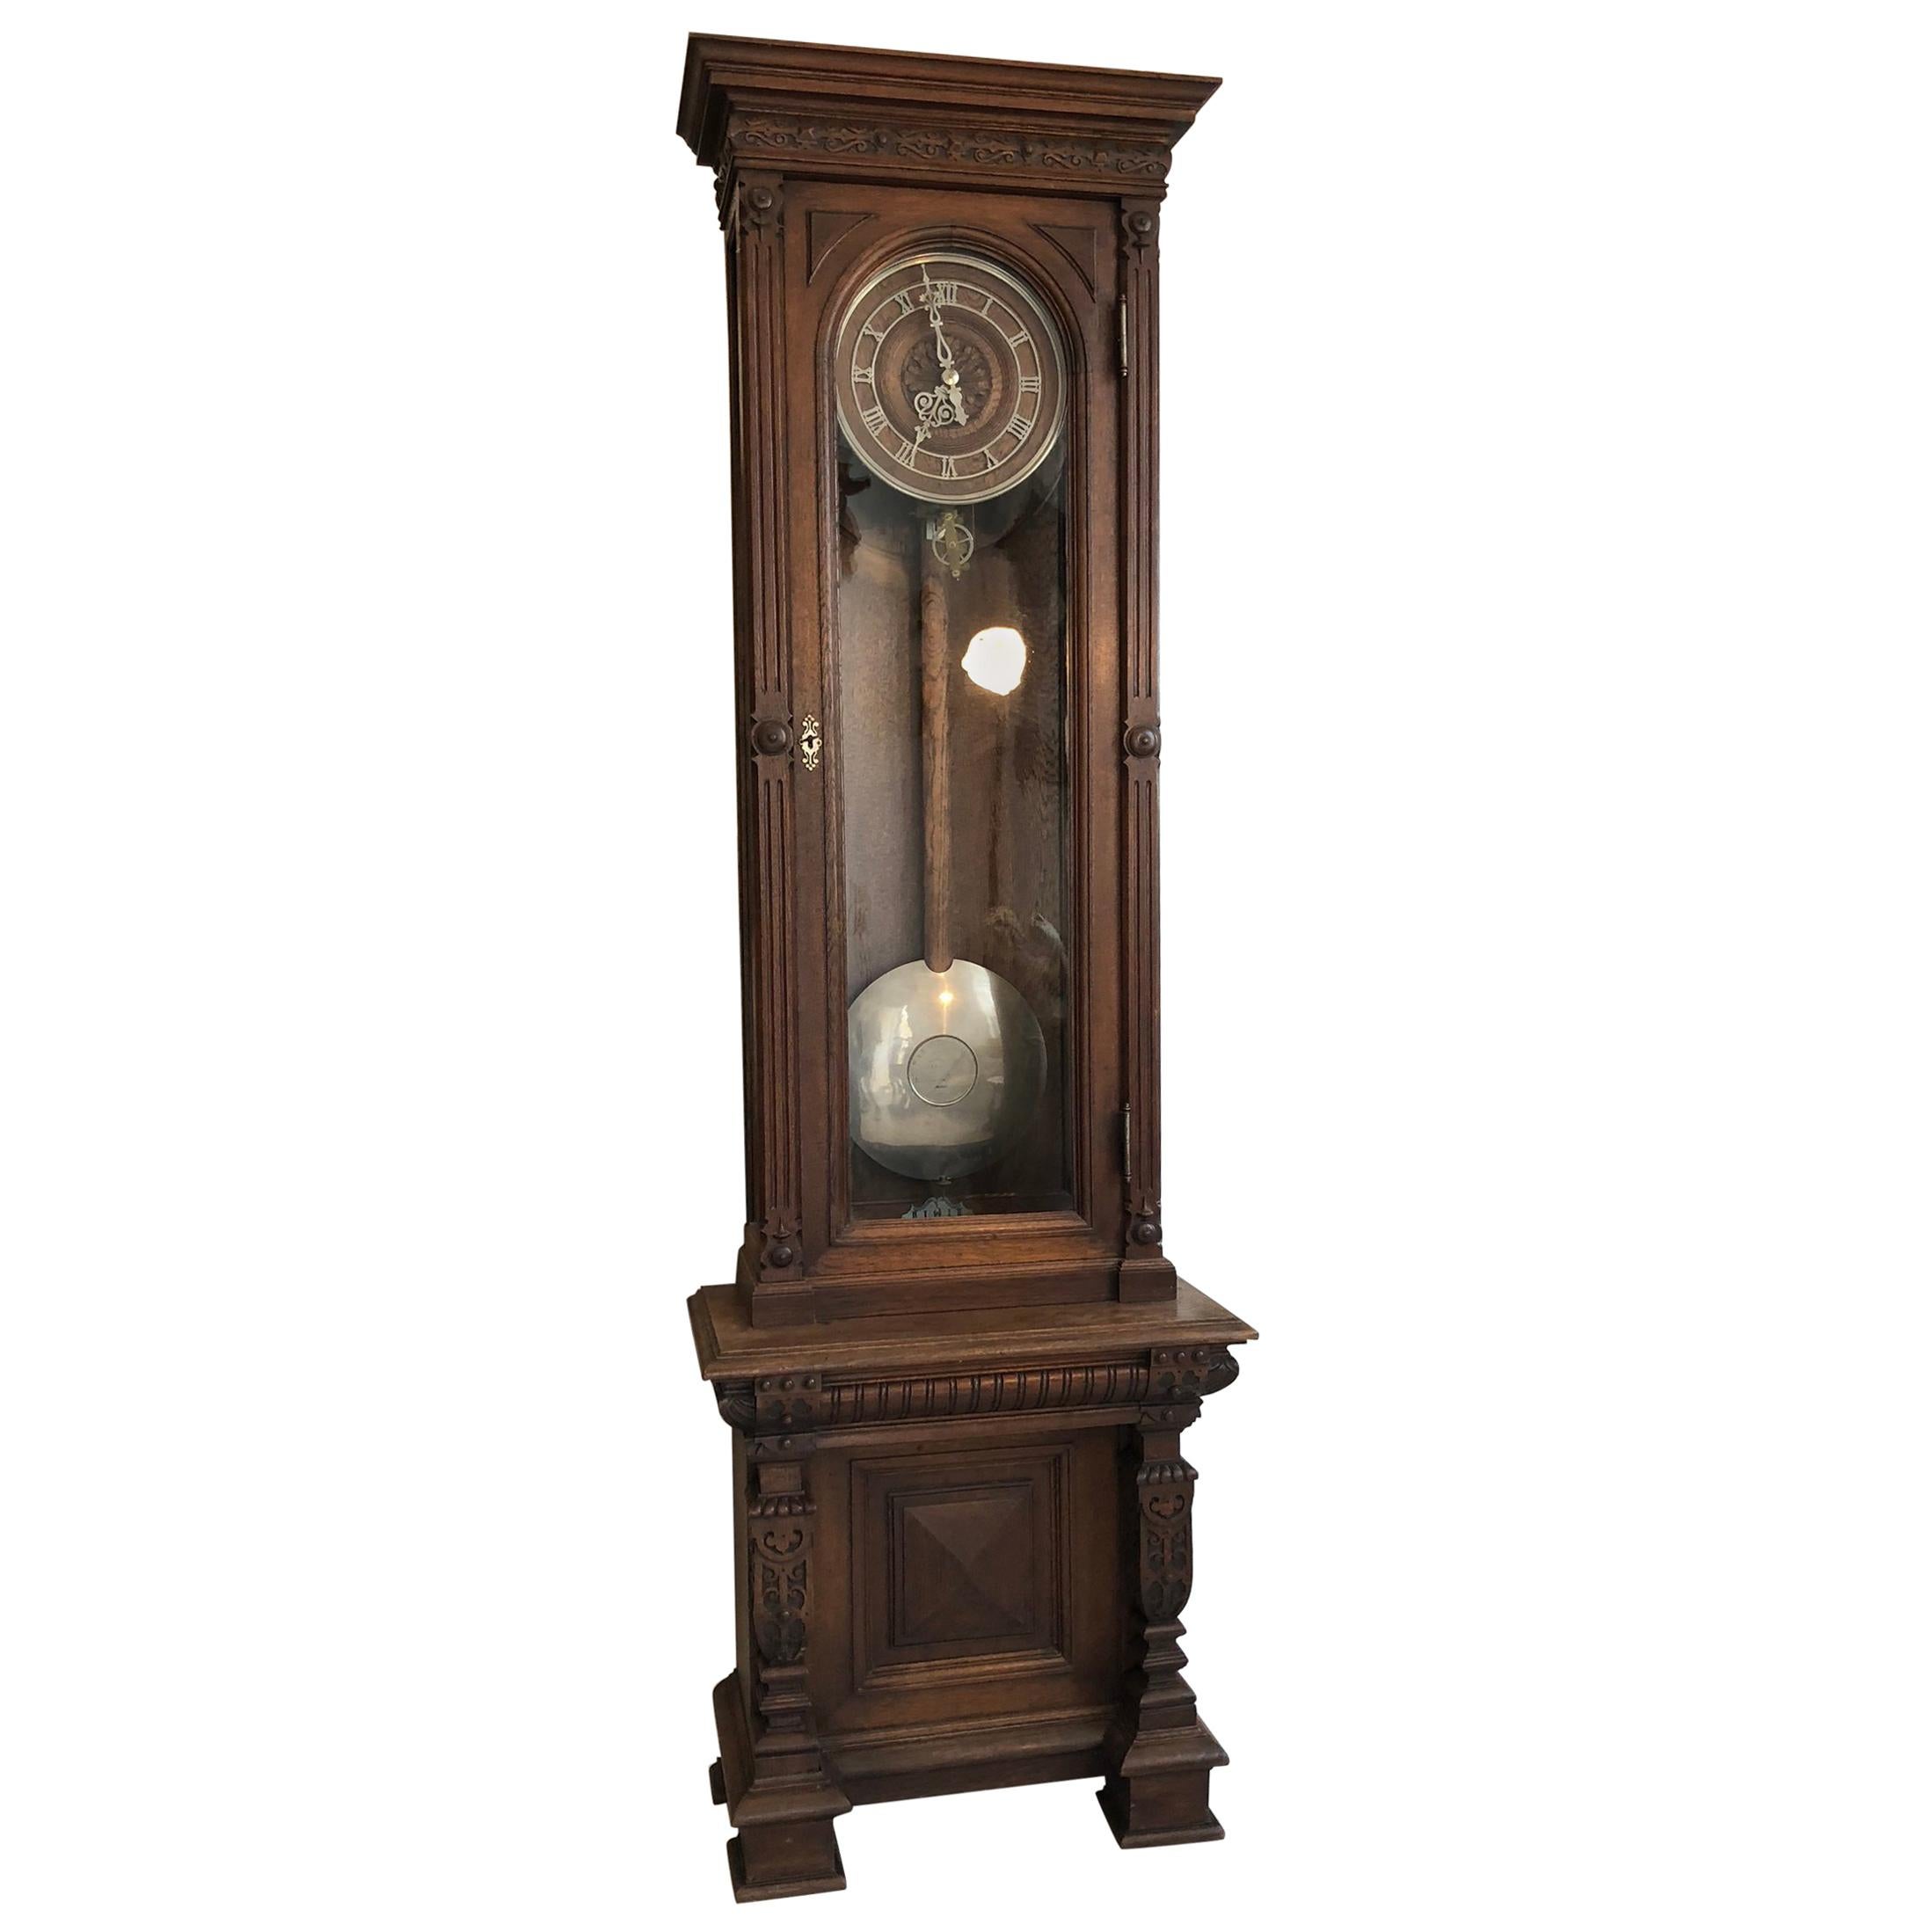 Original Historism Antique Standing Clock / Grandfather Clock with Pendulum